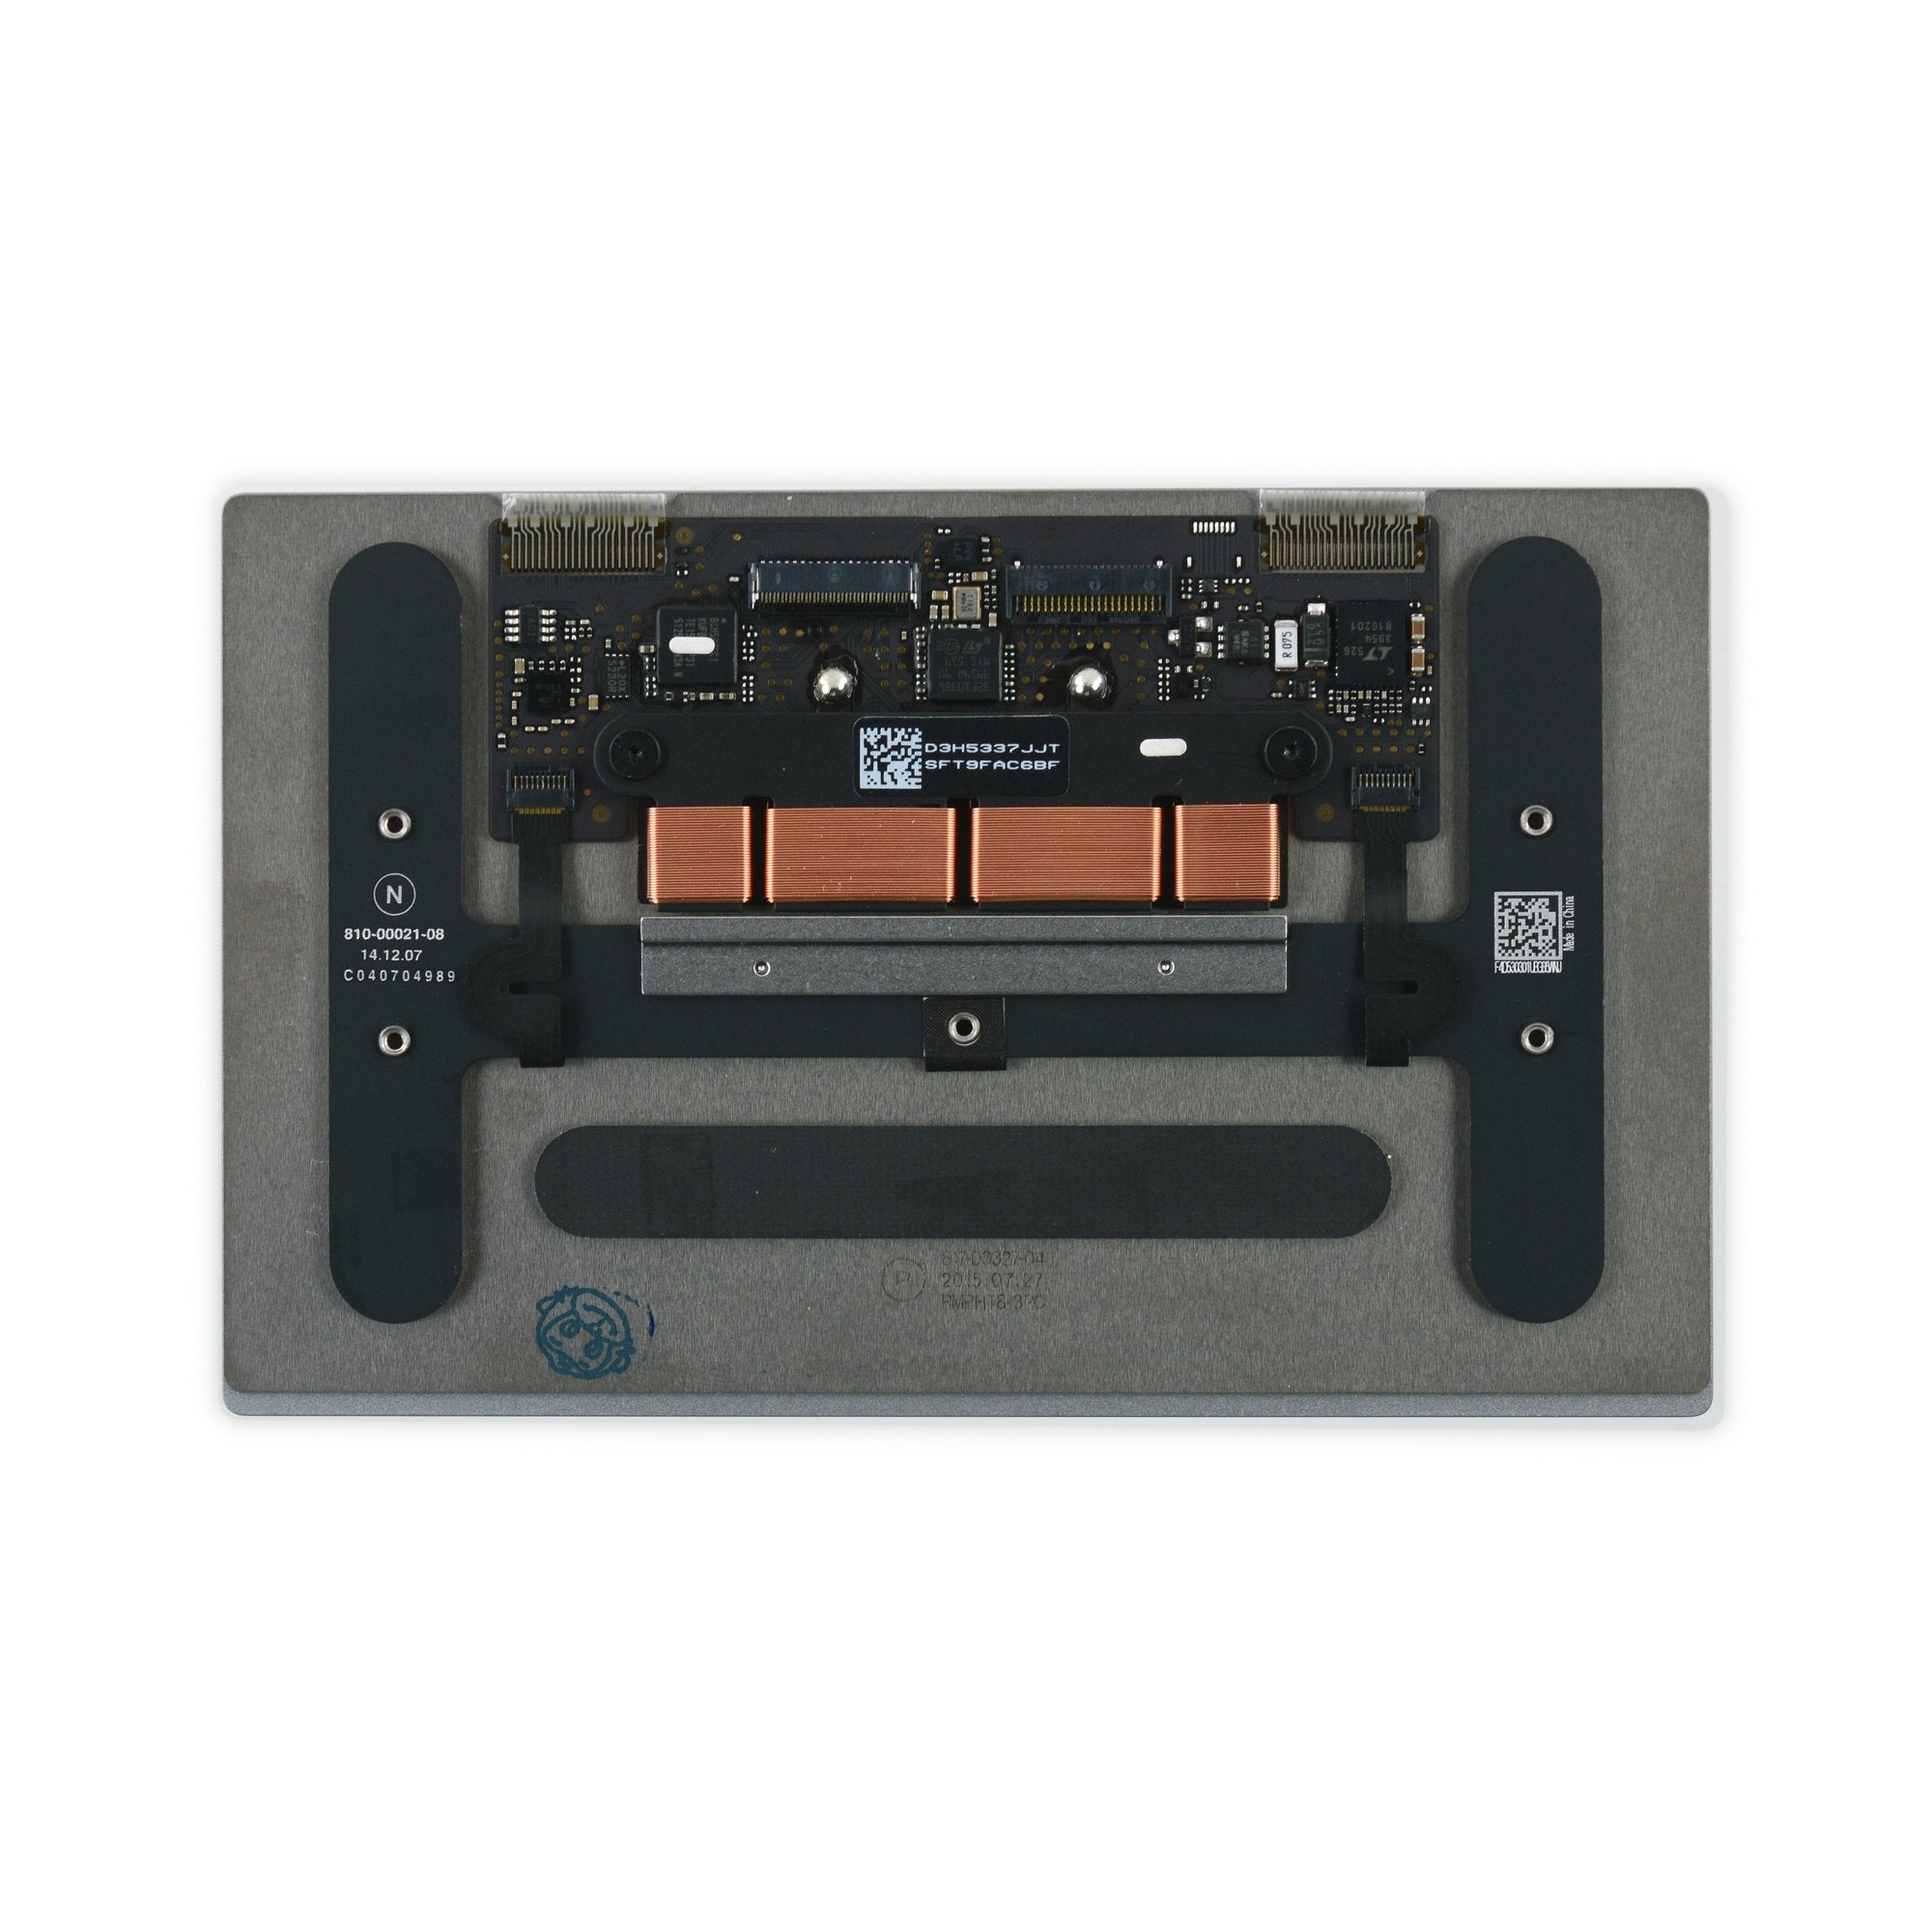 MacBook 12" Retina (Early 2015) Trackpad Dark Gray New